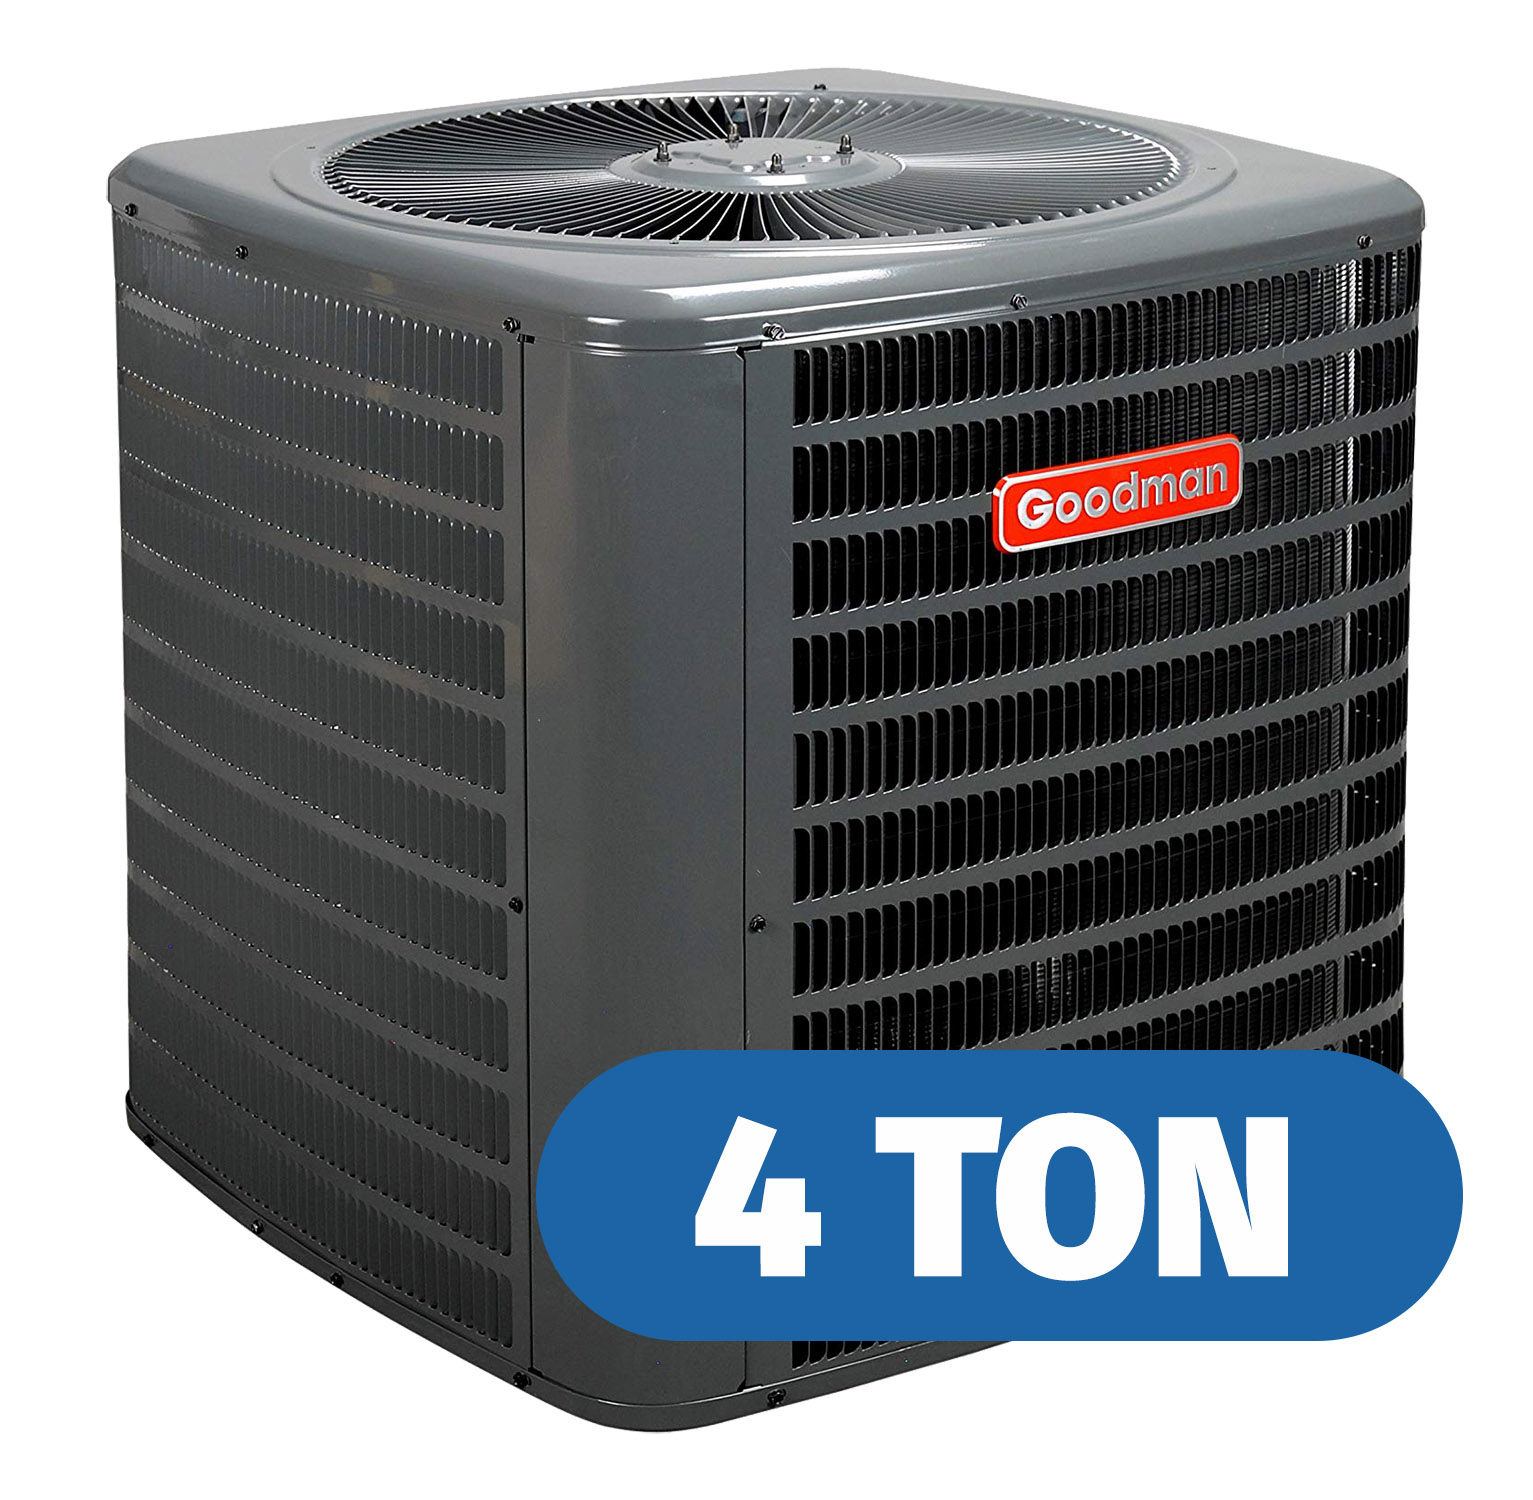 Goodman 4 Ton Air Conditioners 